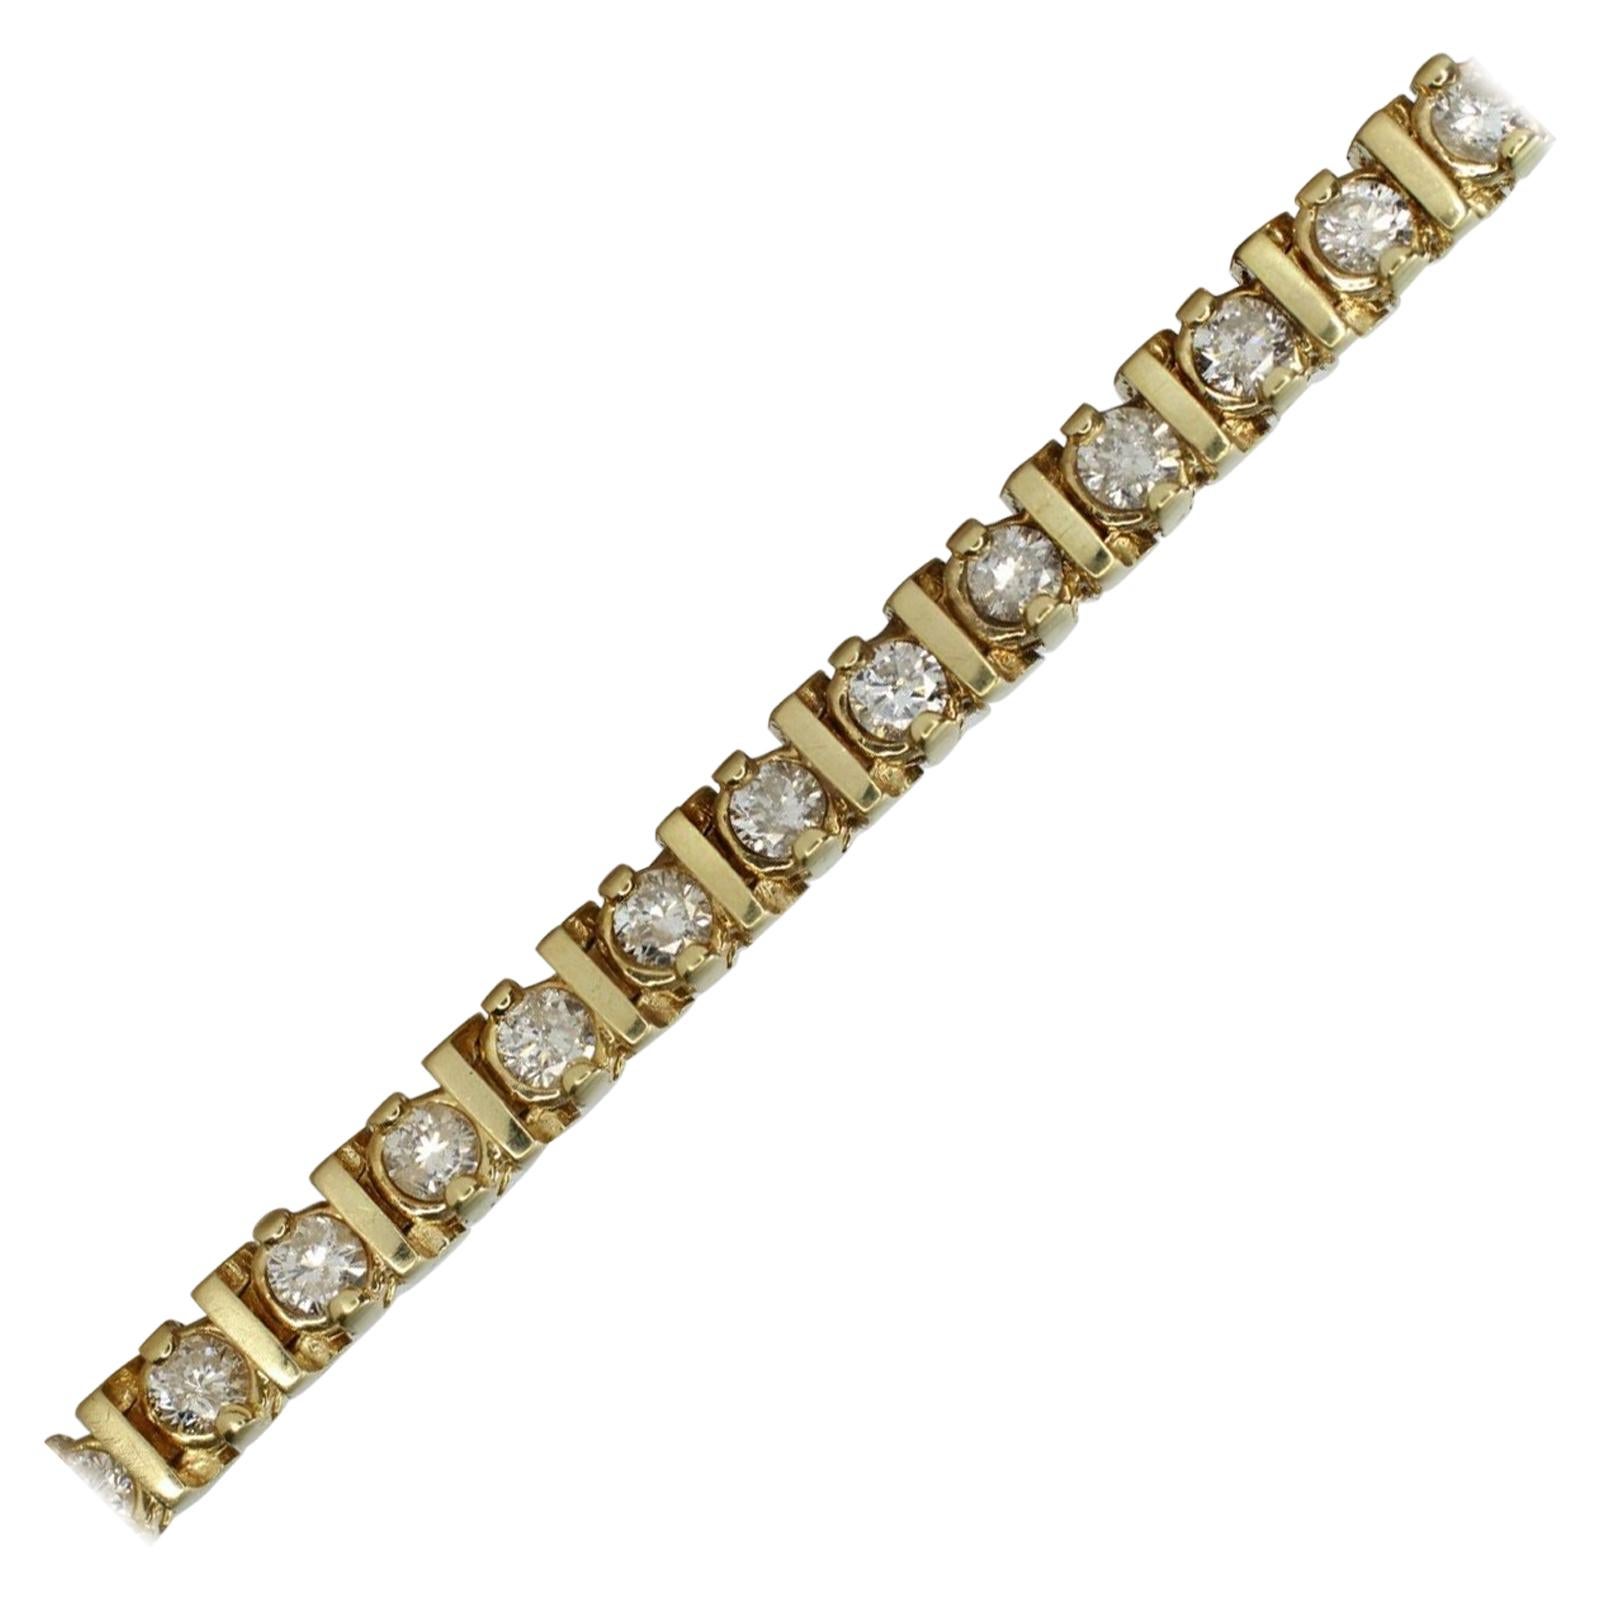 14 Karat Yellow Gold Diamond "Tennis" Bracelet with 3.08 Carat